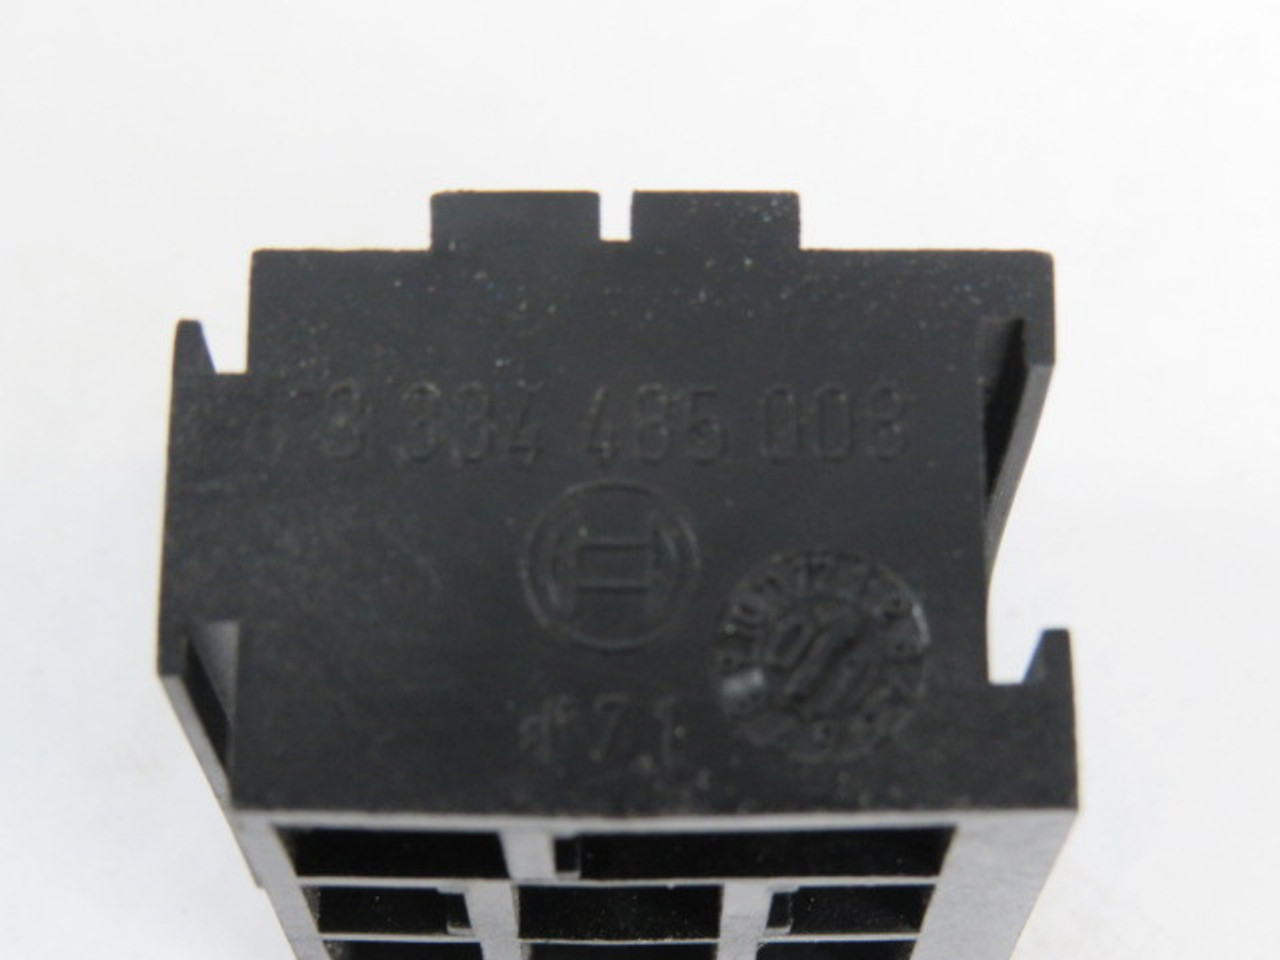 Bosch 3-334-485-008 Relay Socket Mounting Tab USED